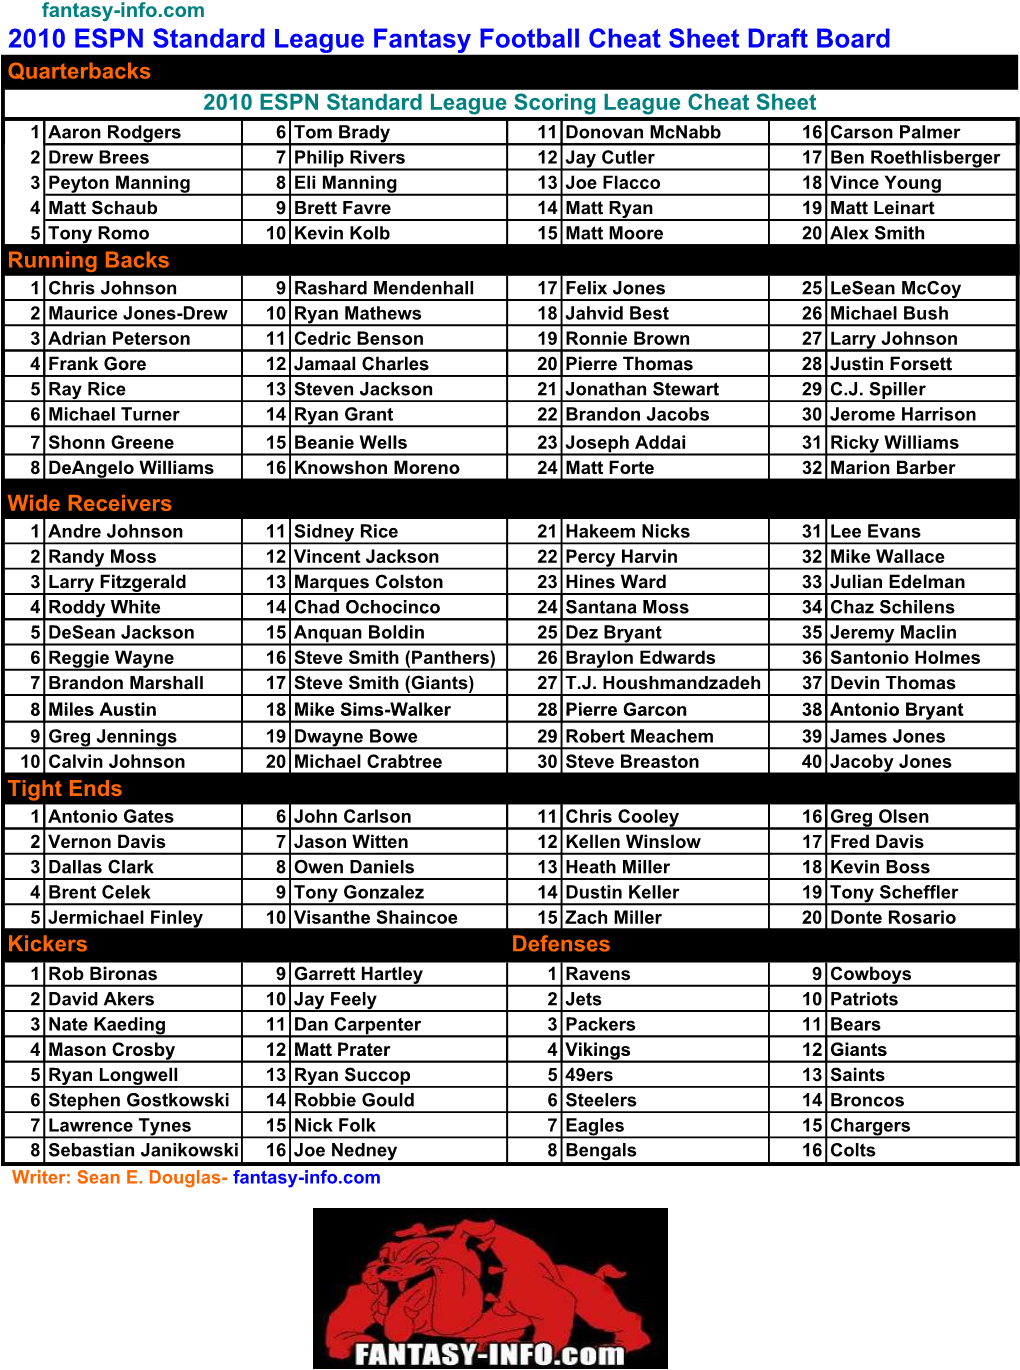 2010 ESPN Standard League Fantasy Football Cheat Sheet Draft